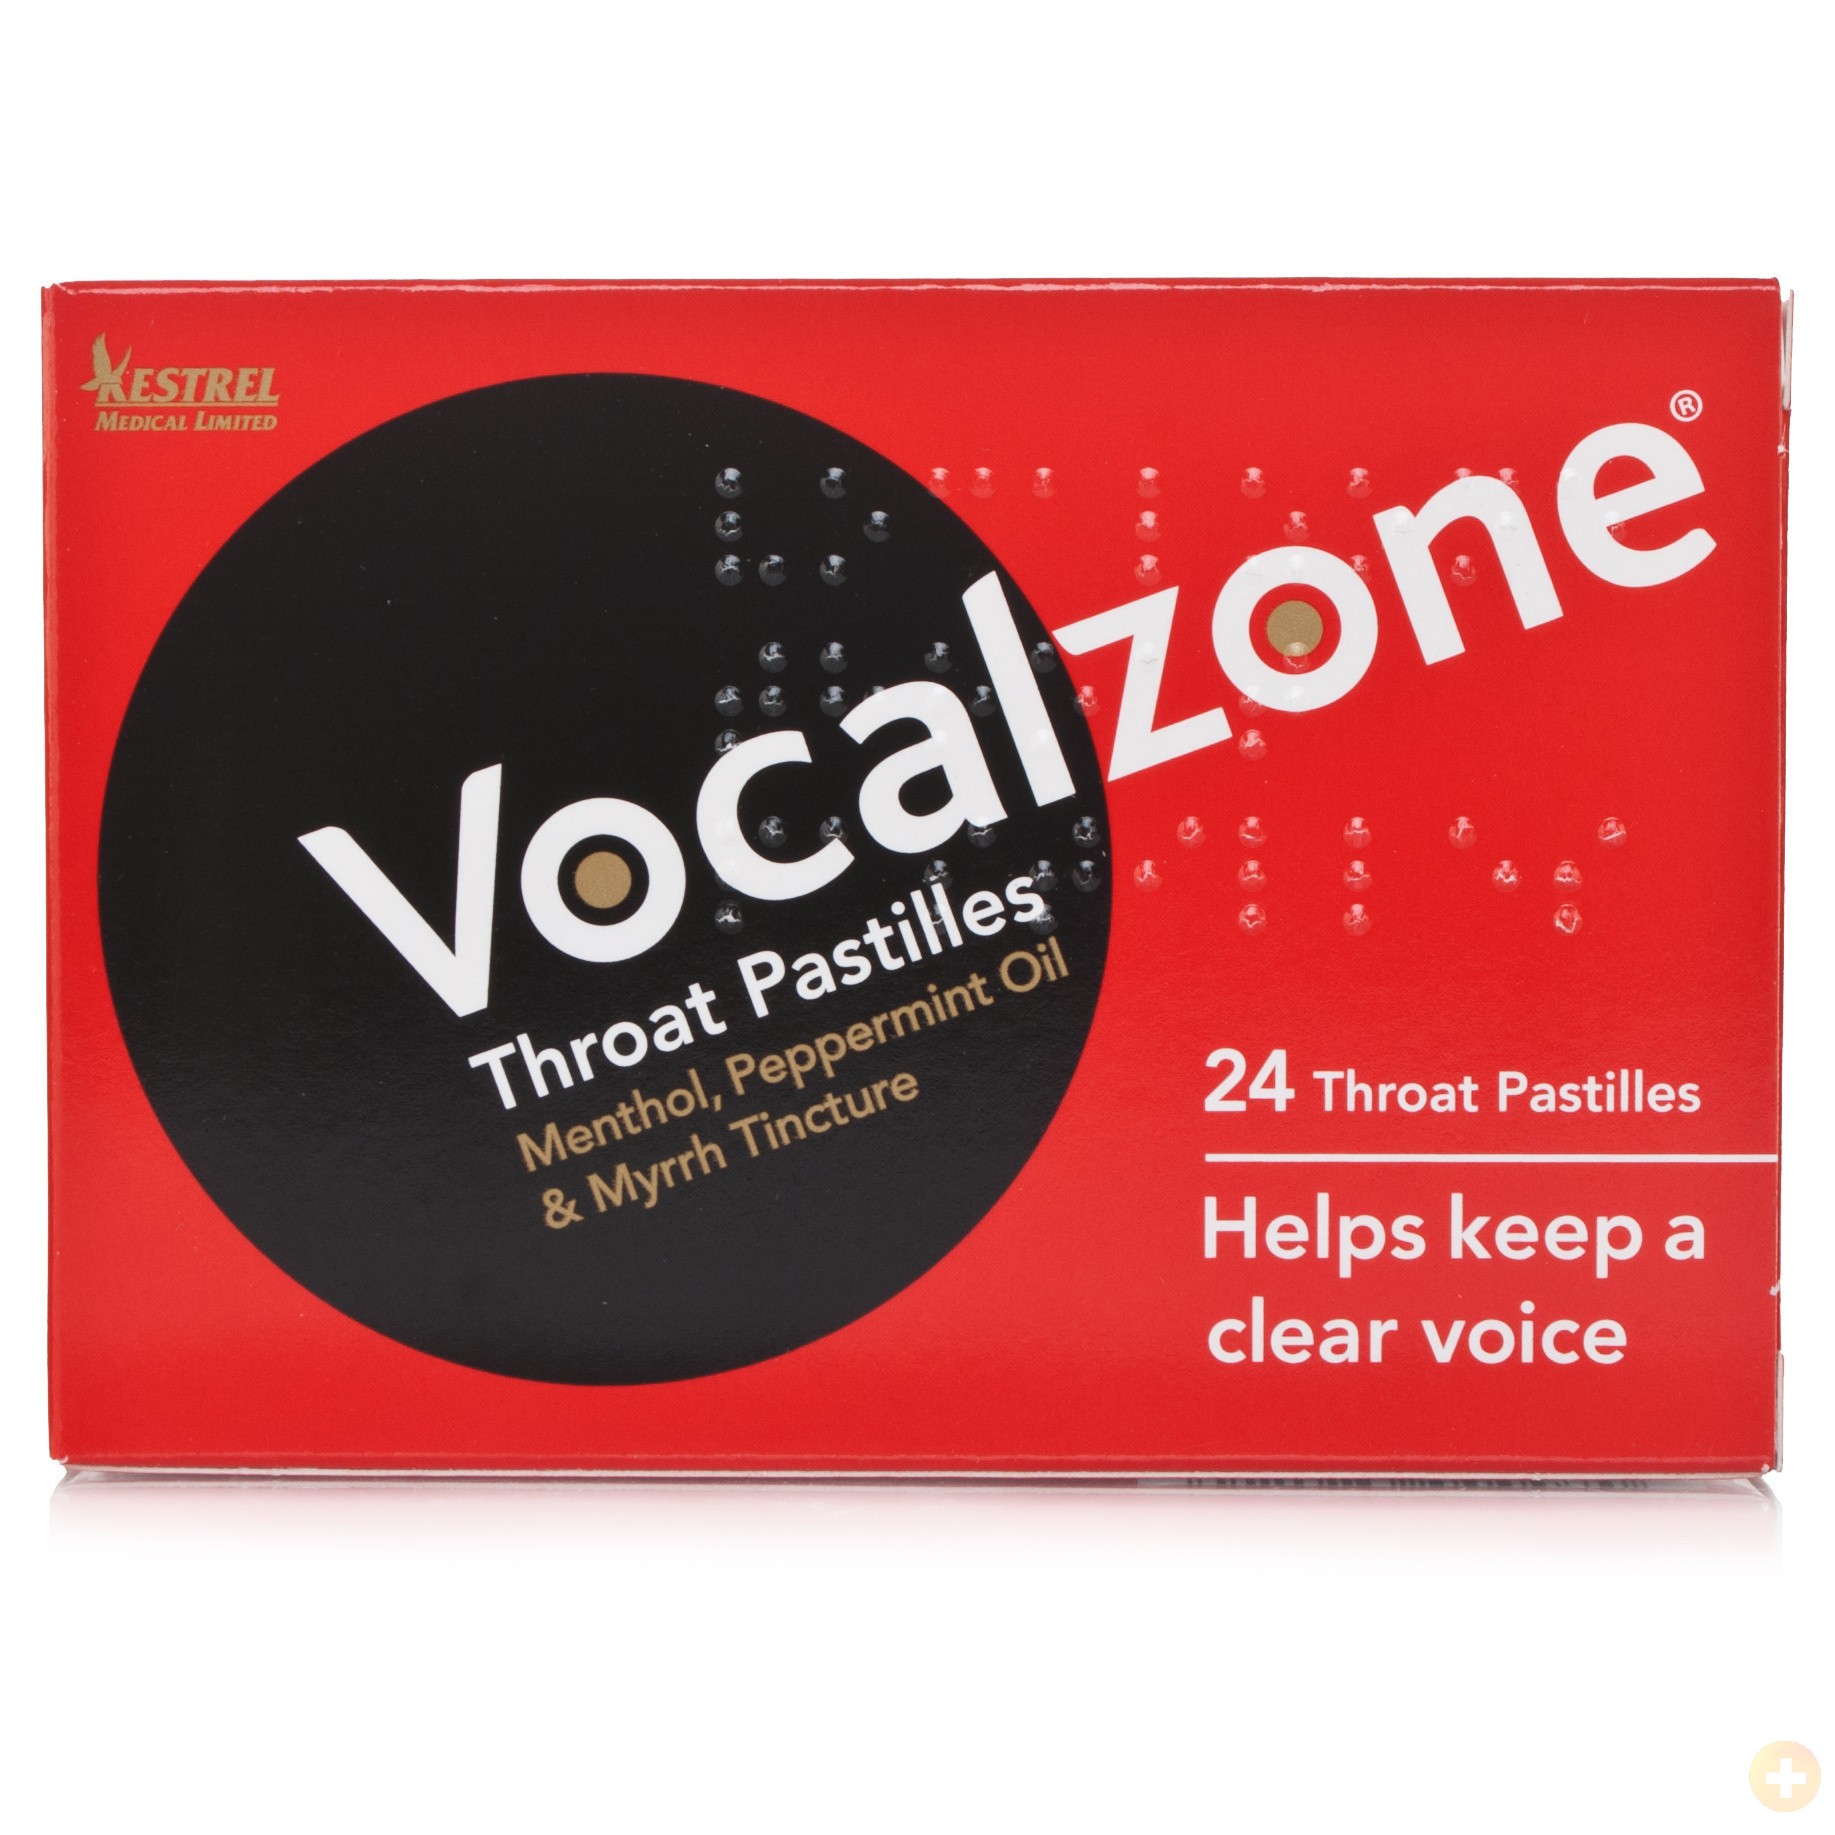 Vocalzone Throat Pastilles 24s